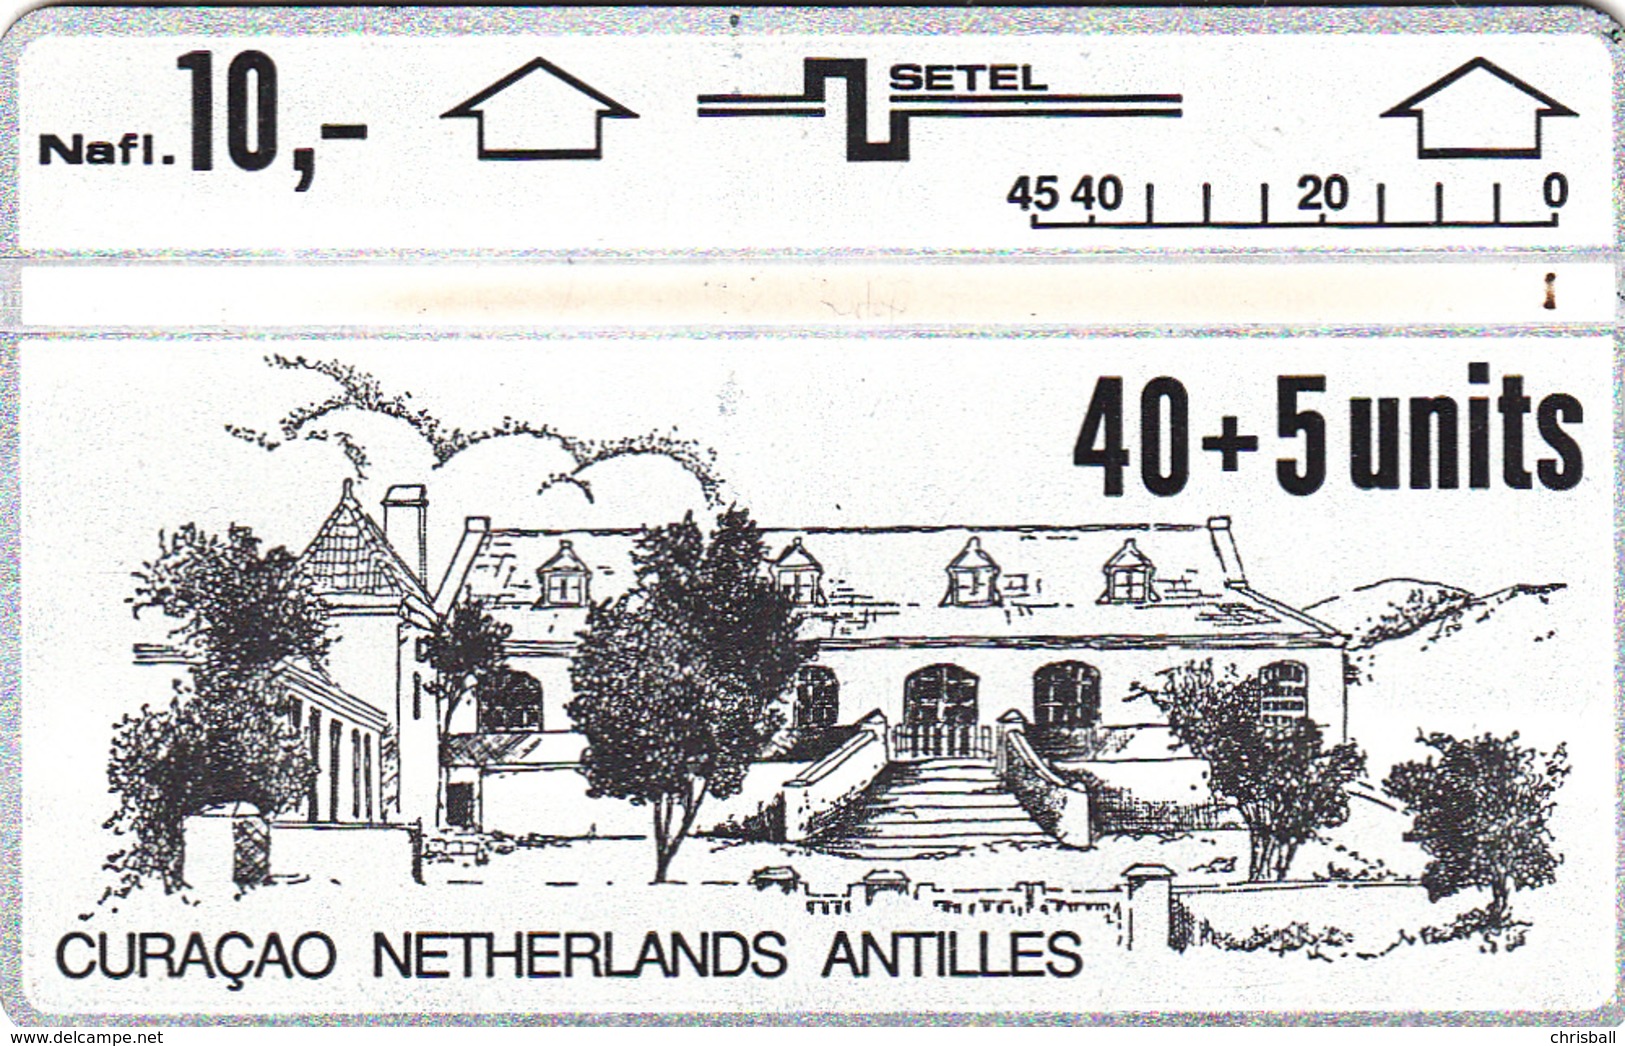 Curacao  Phonecard Netherland Antilles - 40+5unit  - Superb Fine Used - Antilles (Netherlands)